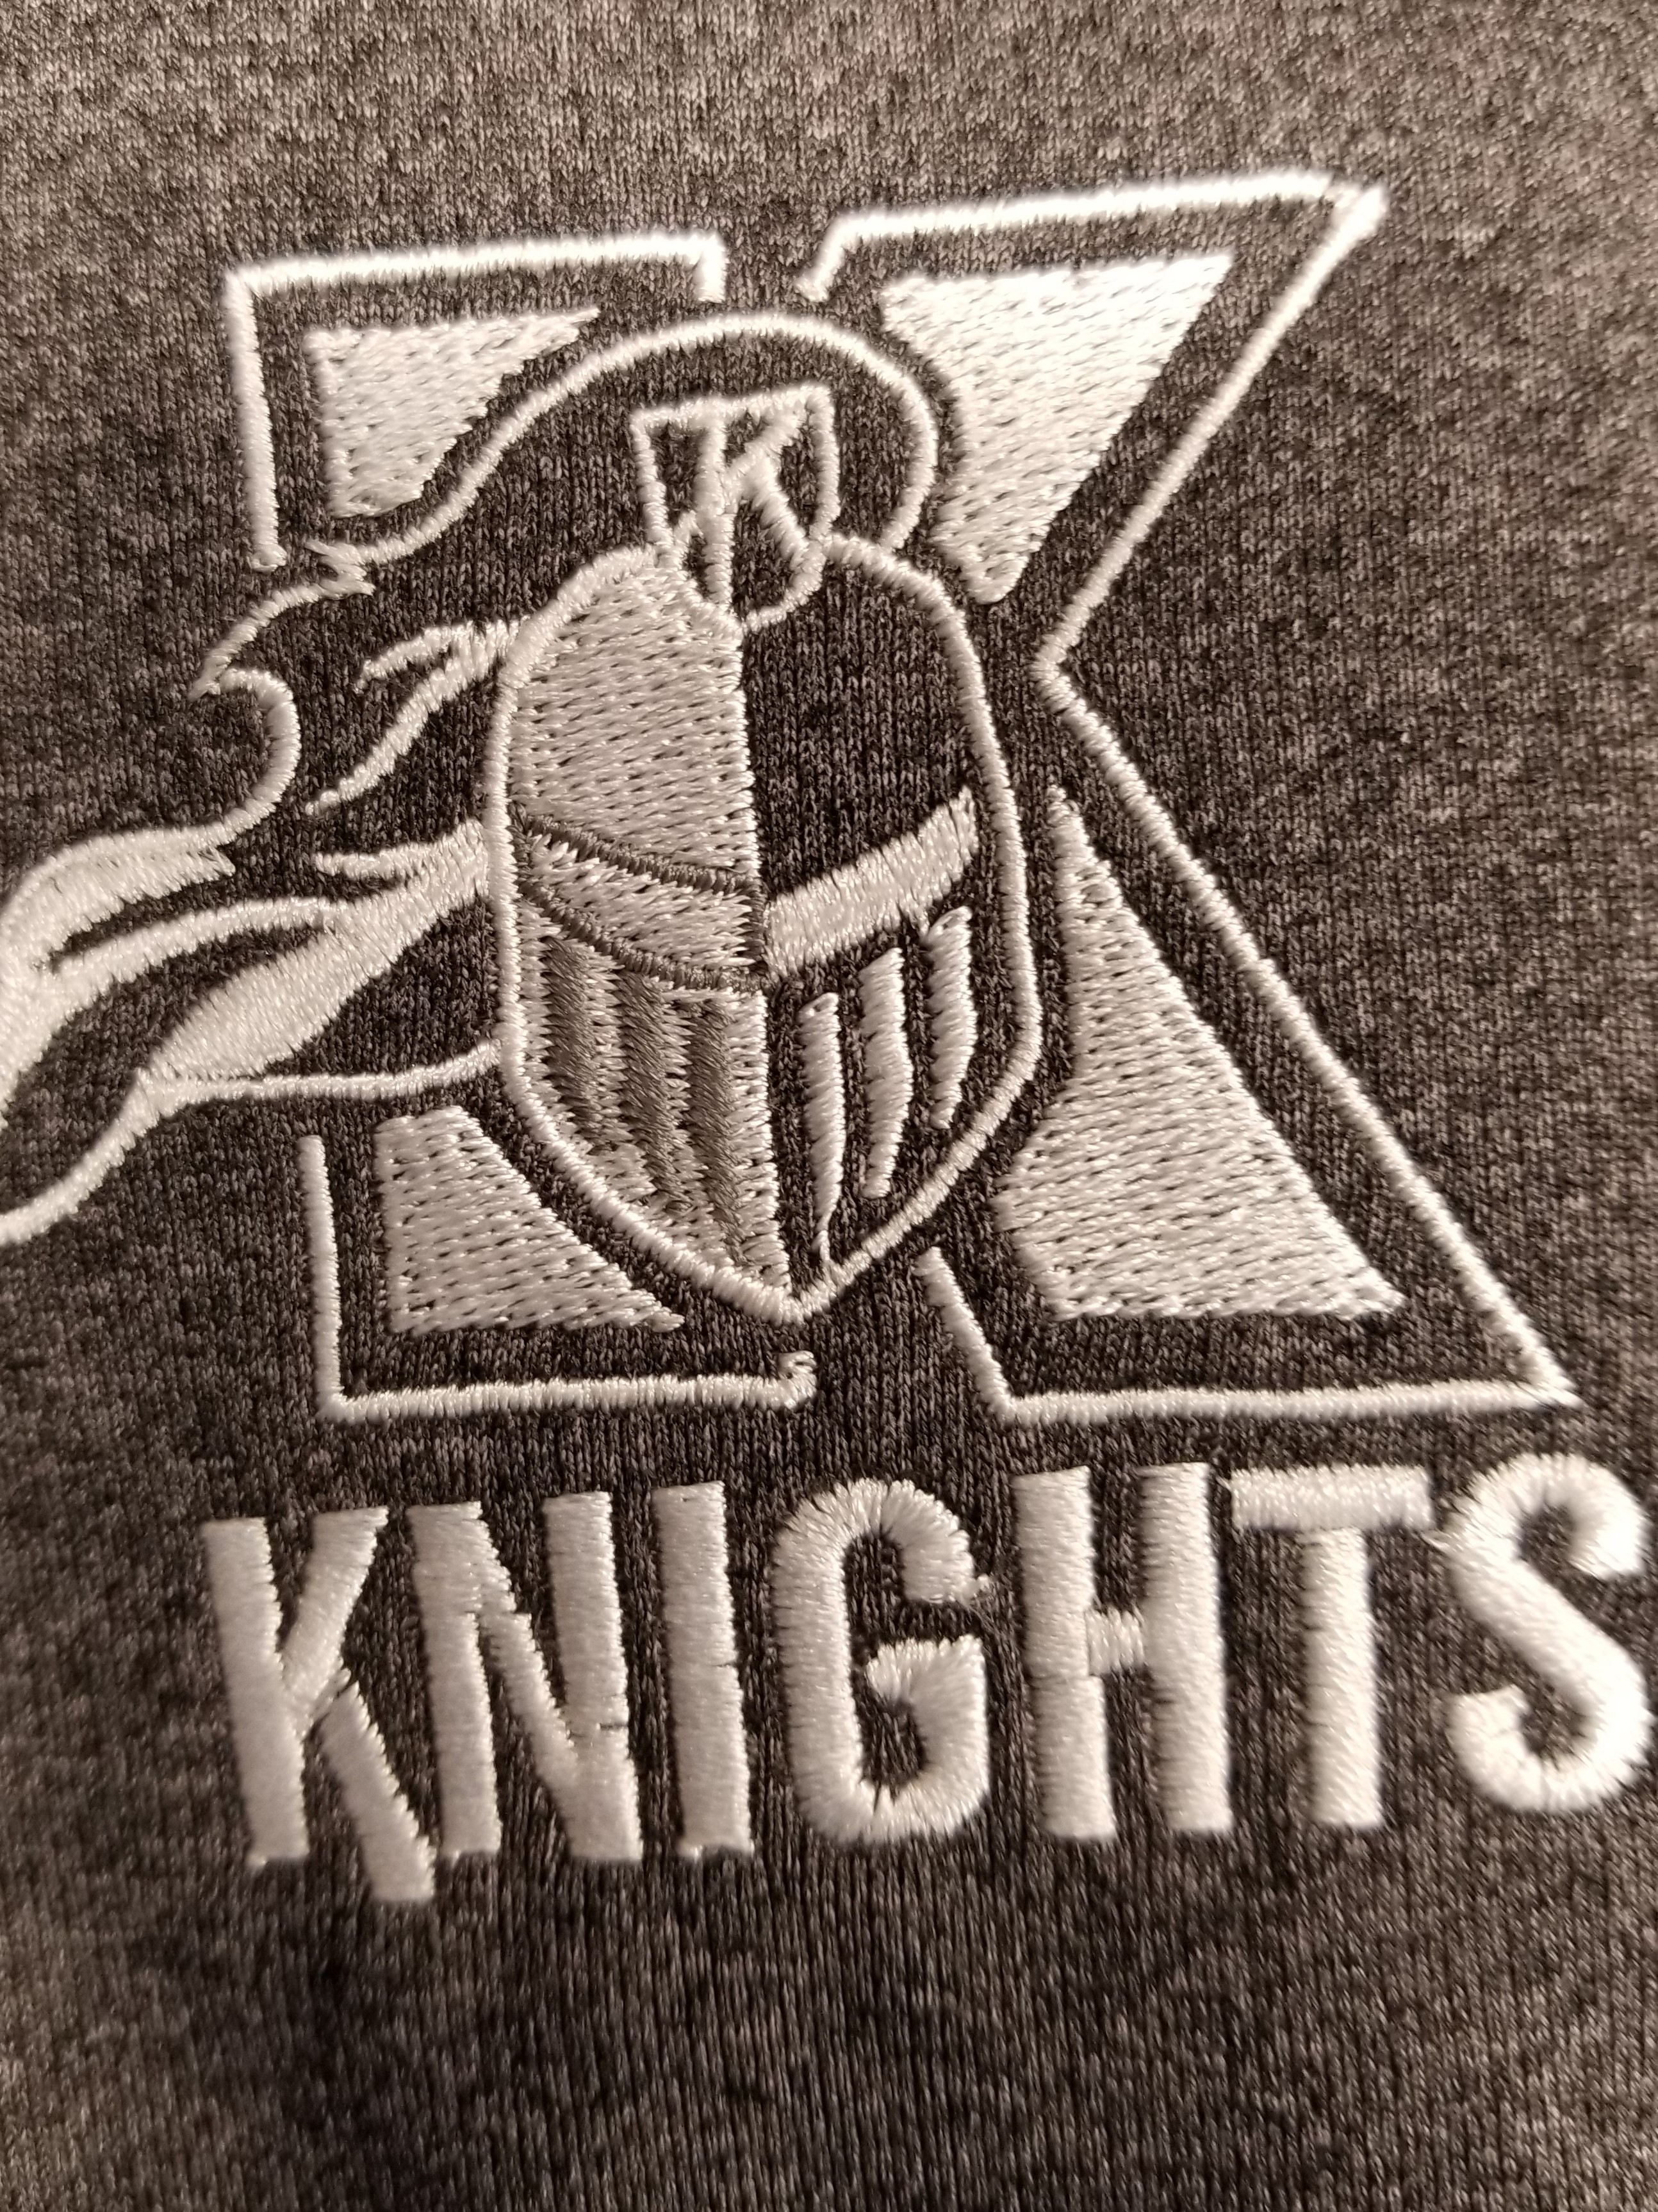 GO Knights!